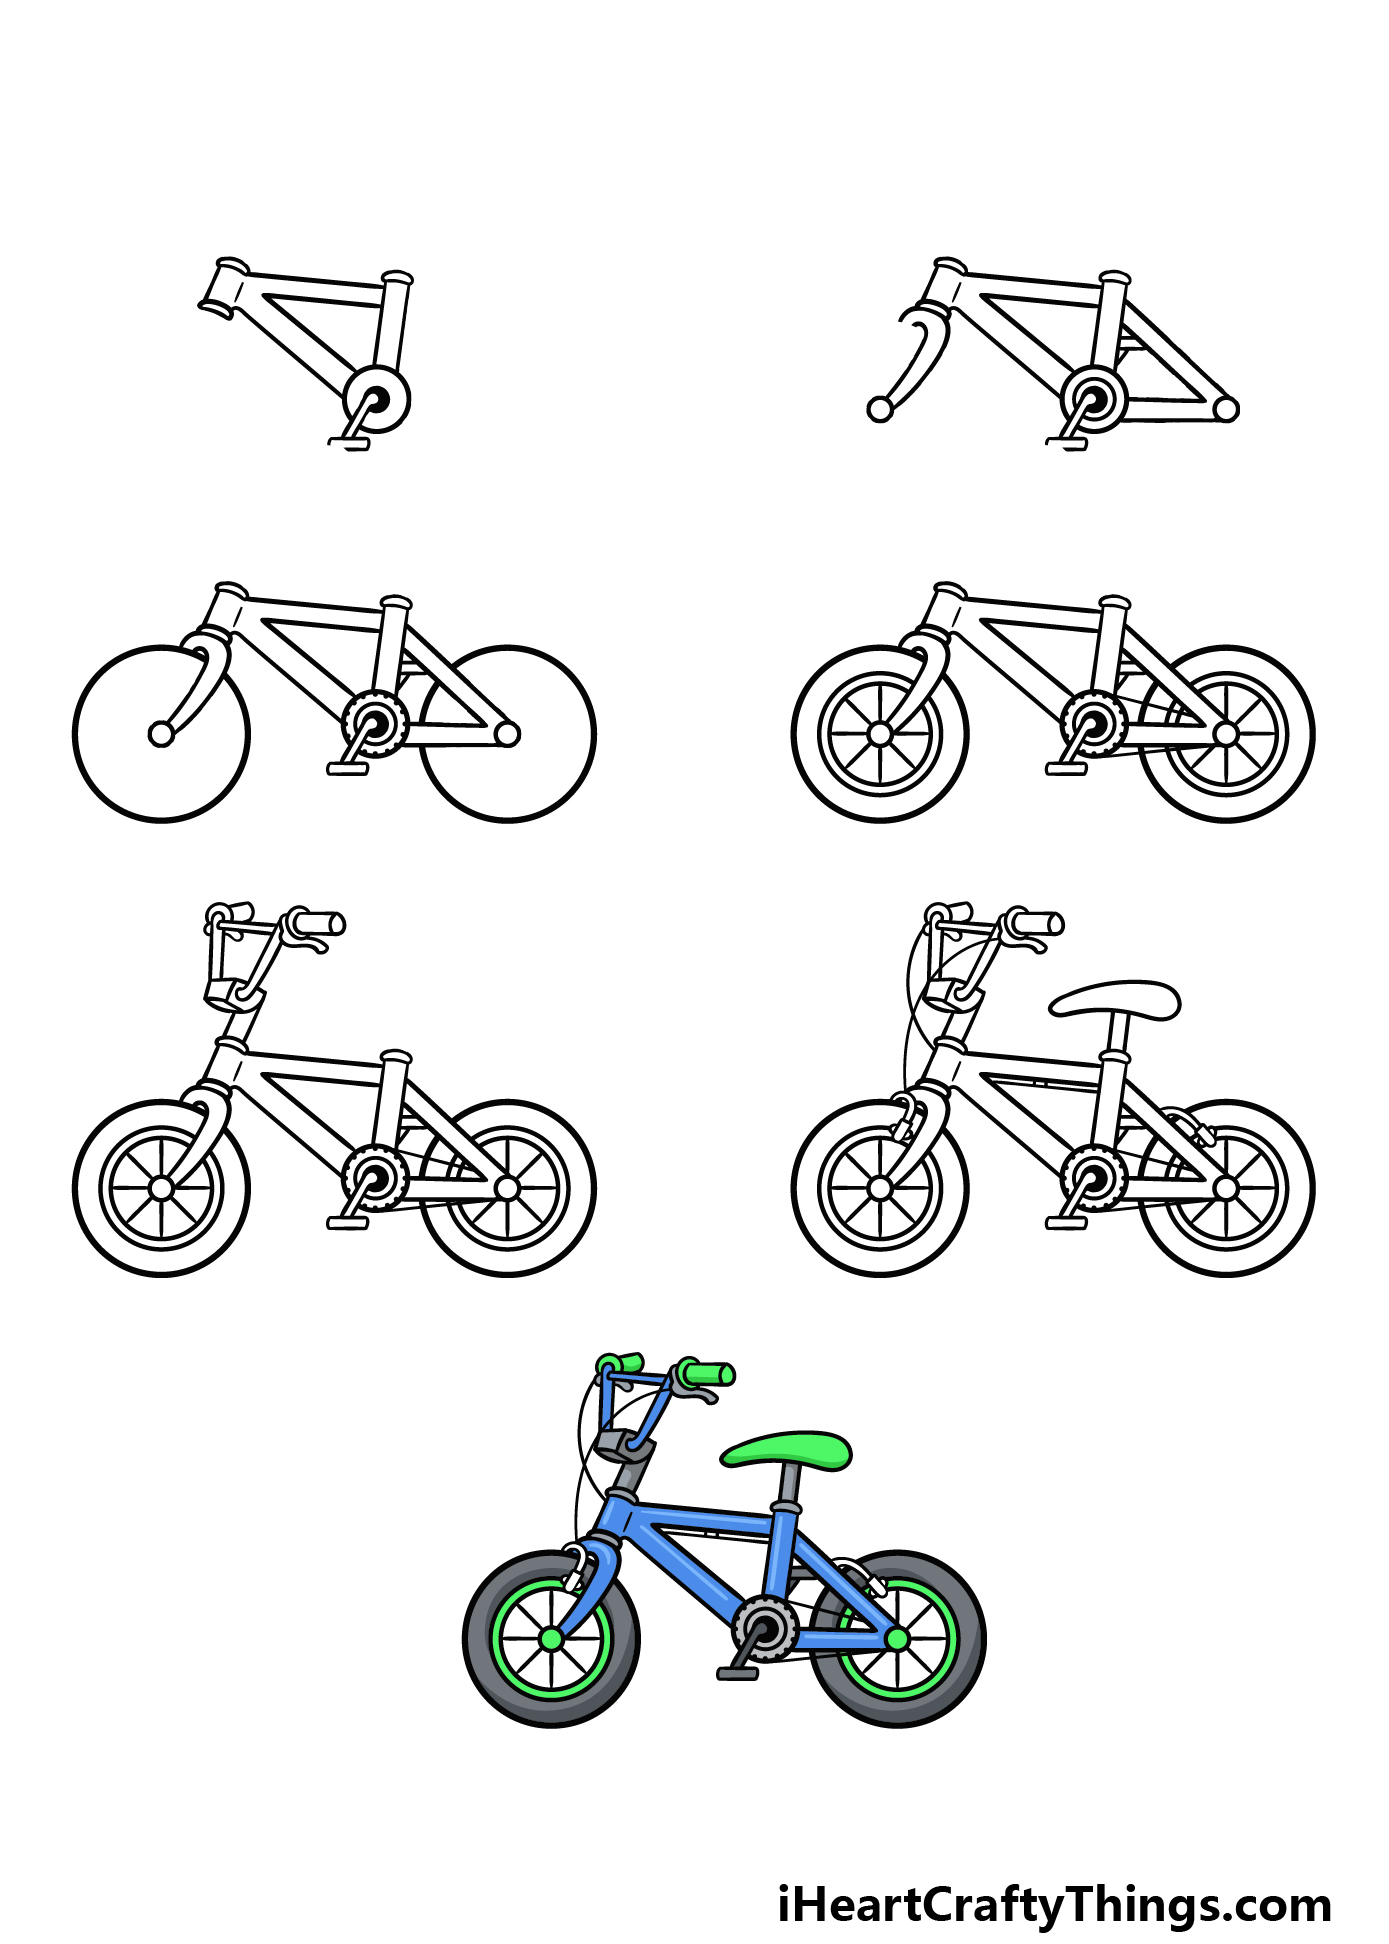 how to draw a cartoon bike in 7 steps